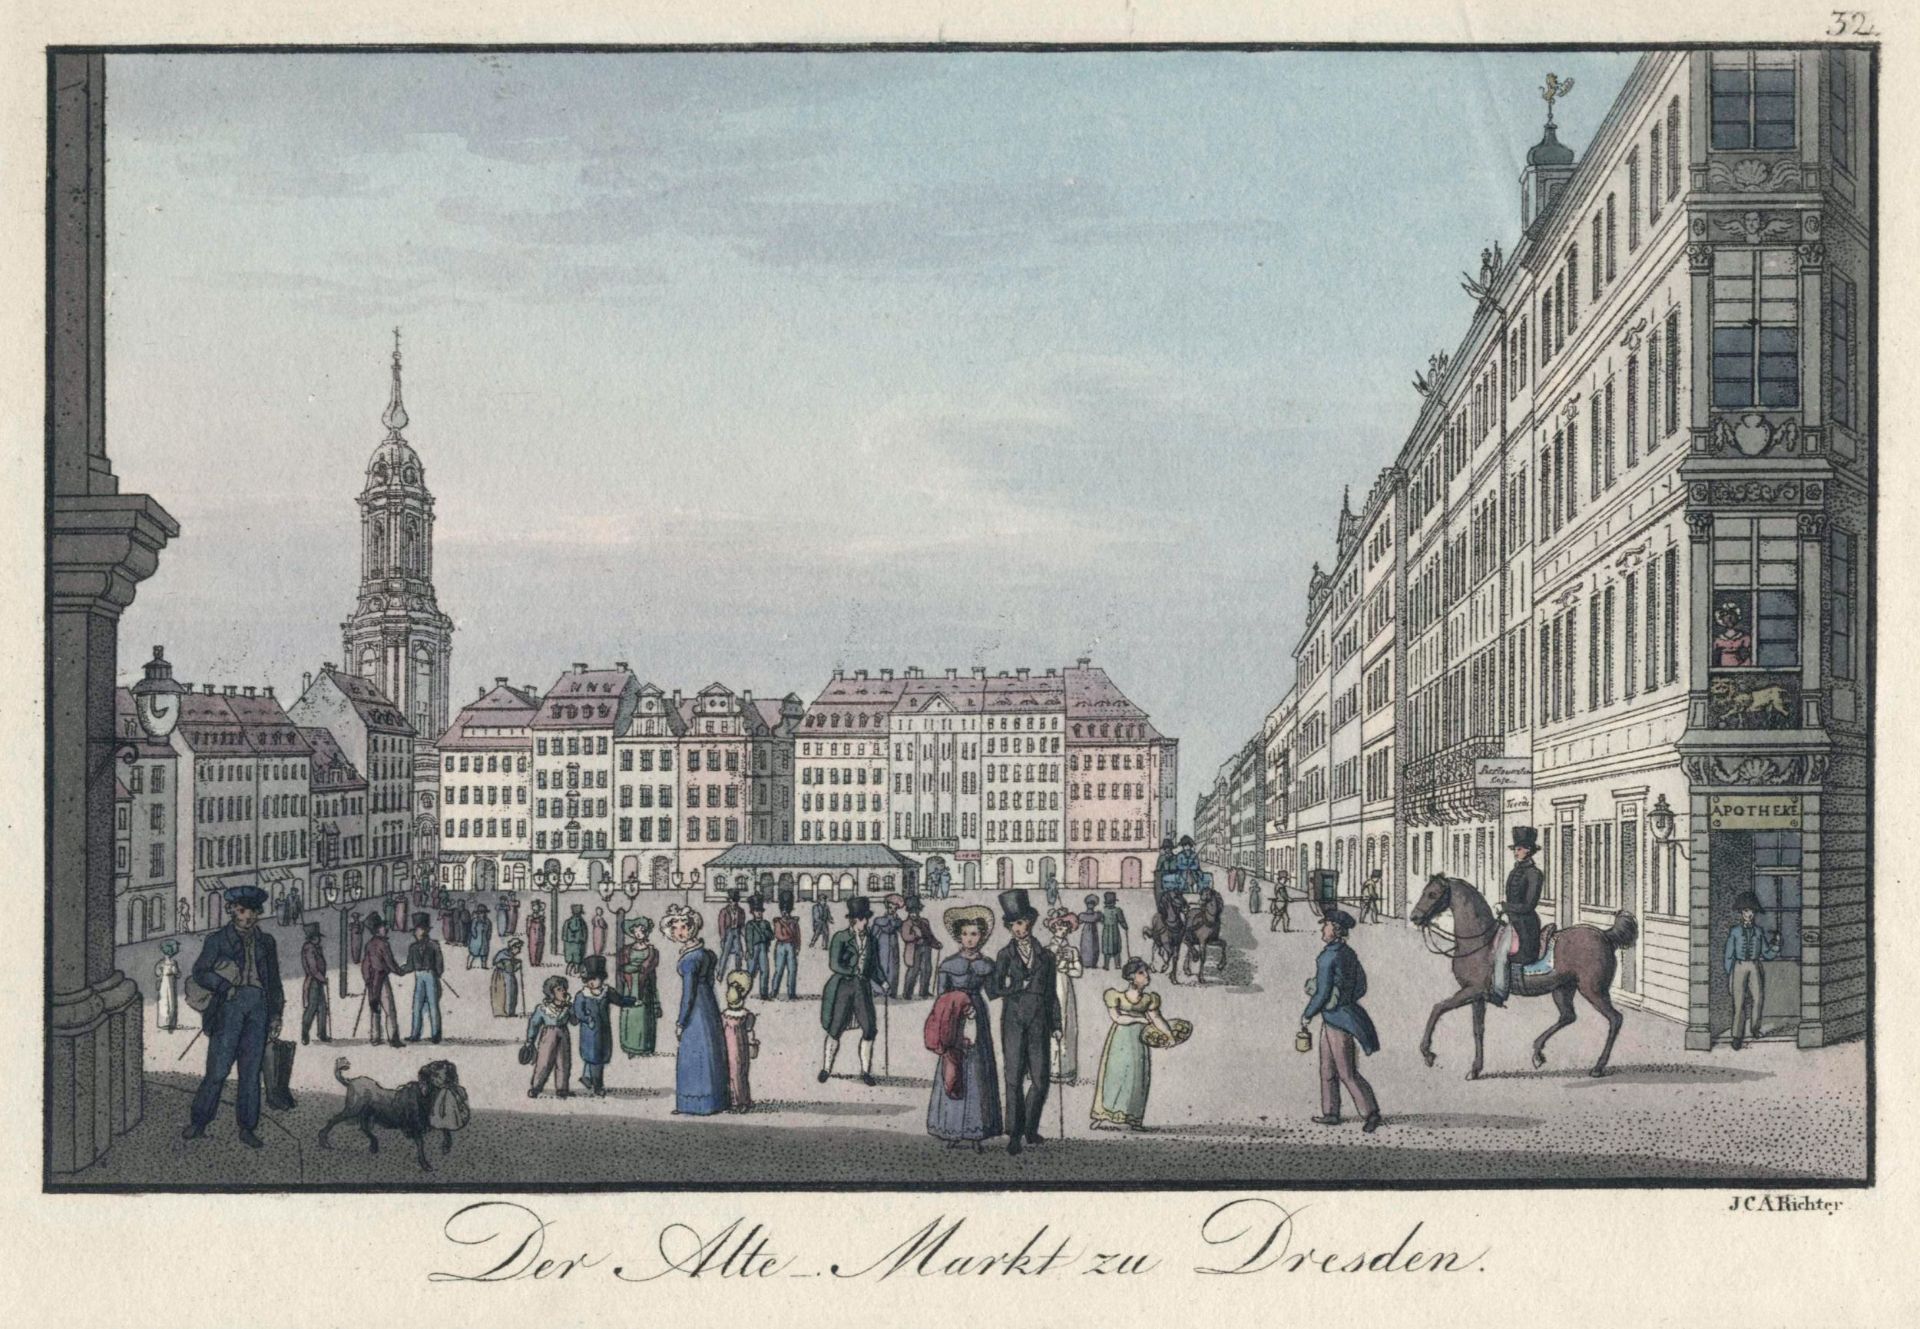 Johann Carl August Richter "Der Alte Markt zu Dresden". Um 1830.